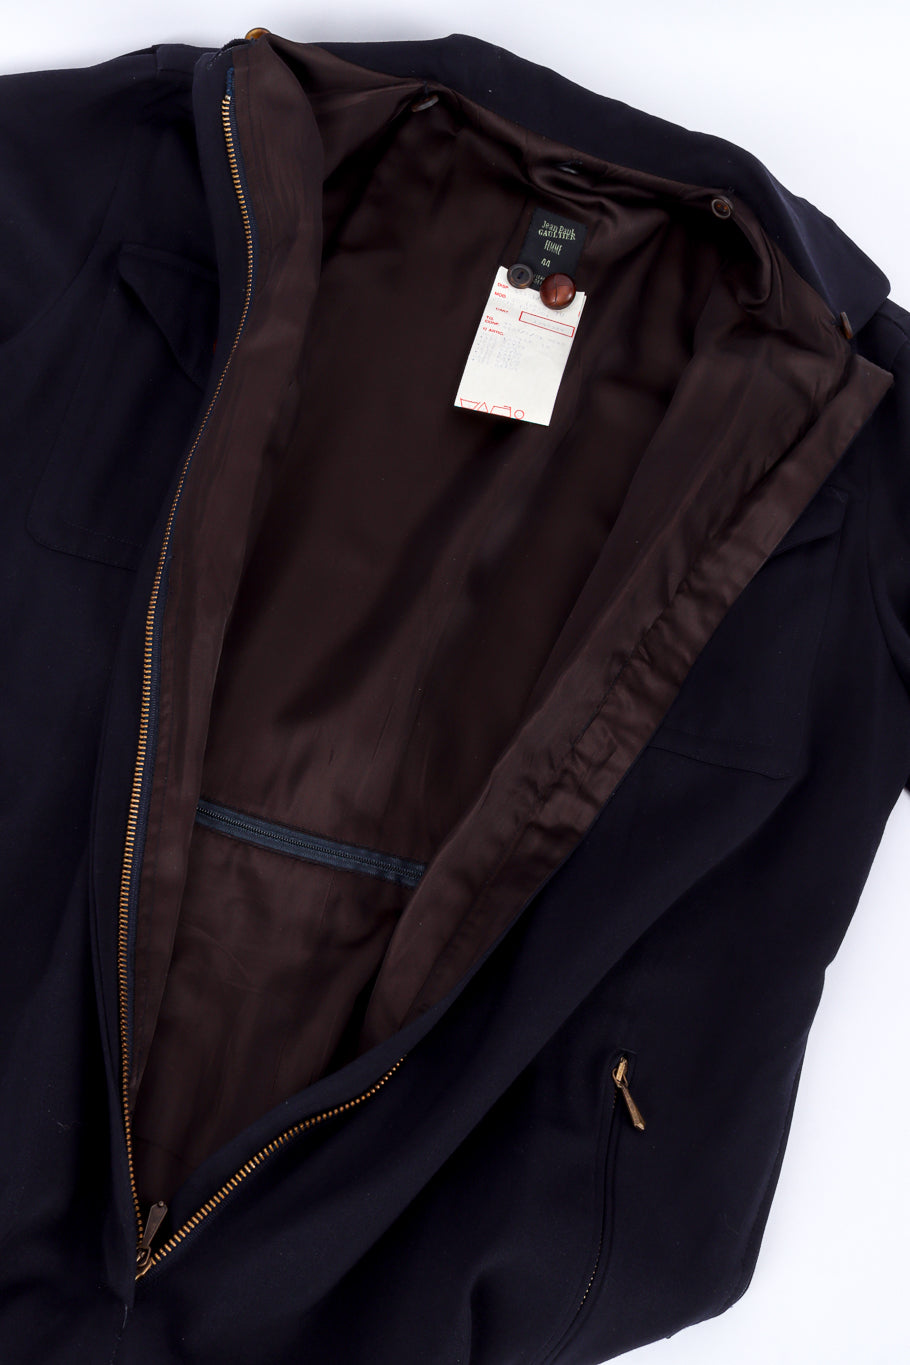 Jean Paul Gaultier Femme Fur Trim Flight Suit front unzipped @recessla